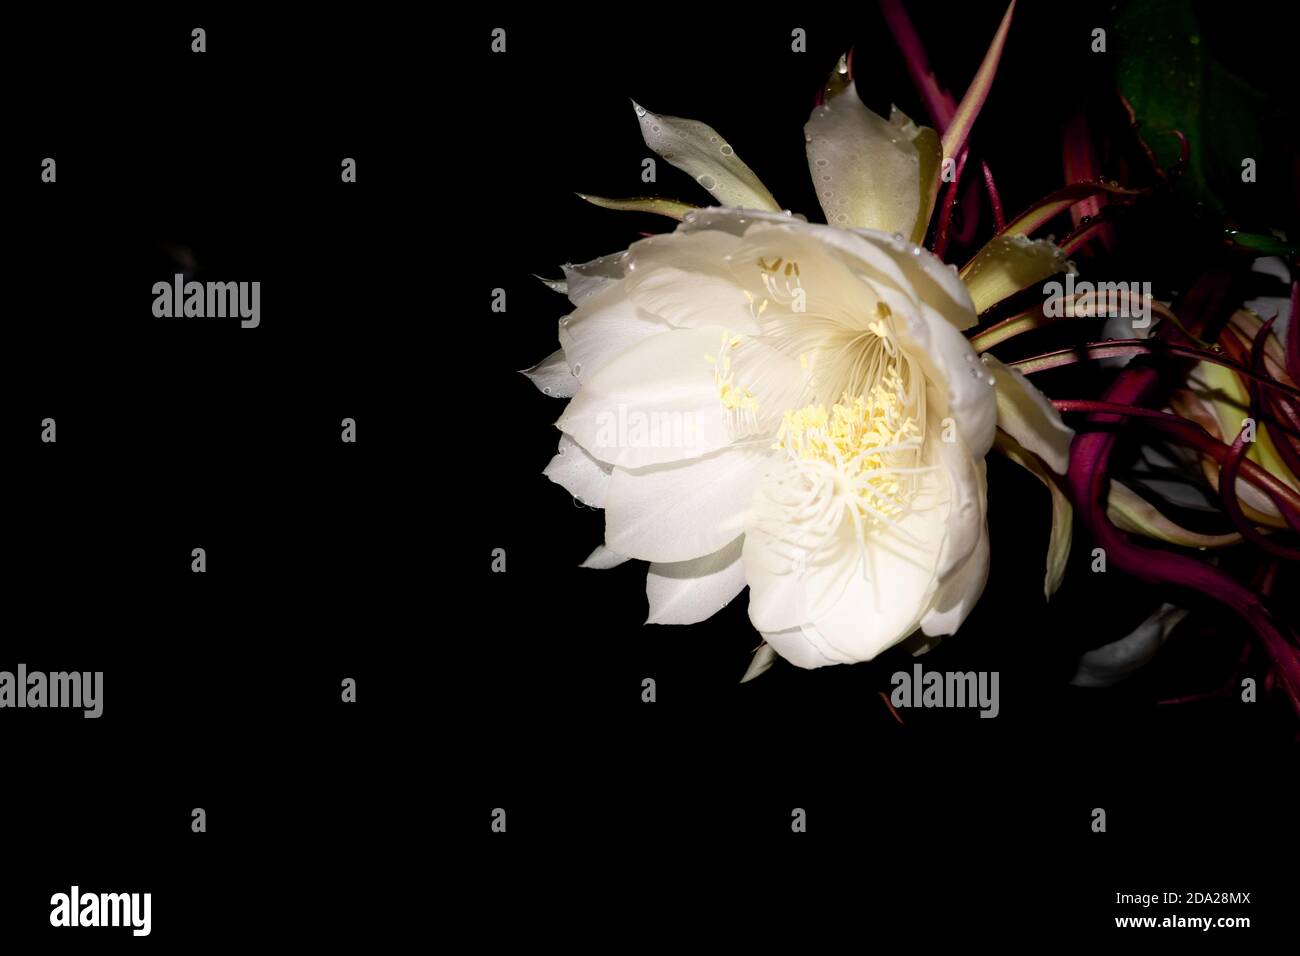 The Wijaya Kusuma (Epiphyllum Anguliger) flower blooms at midnight on a dark background Stock Photo